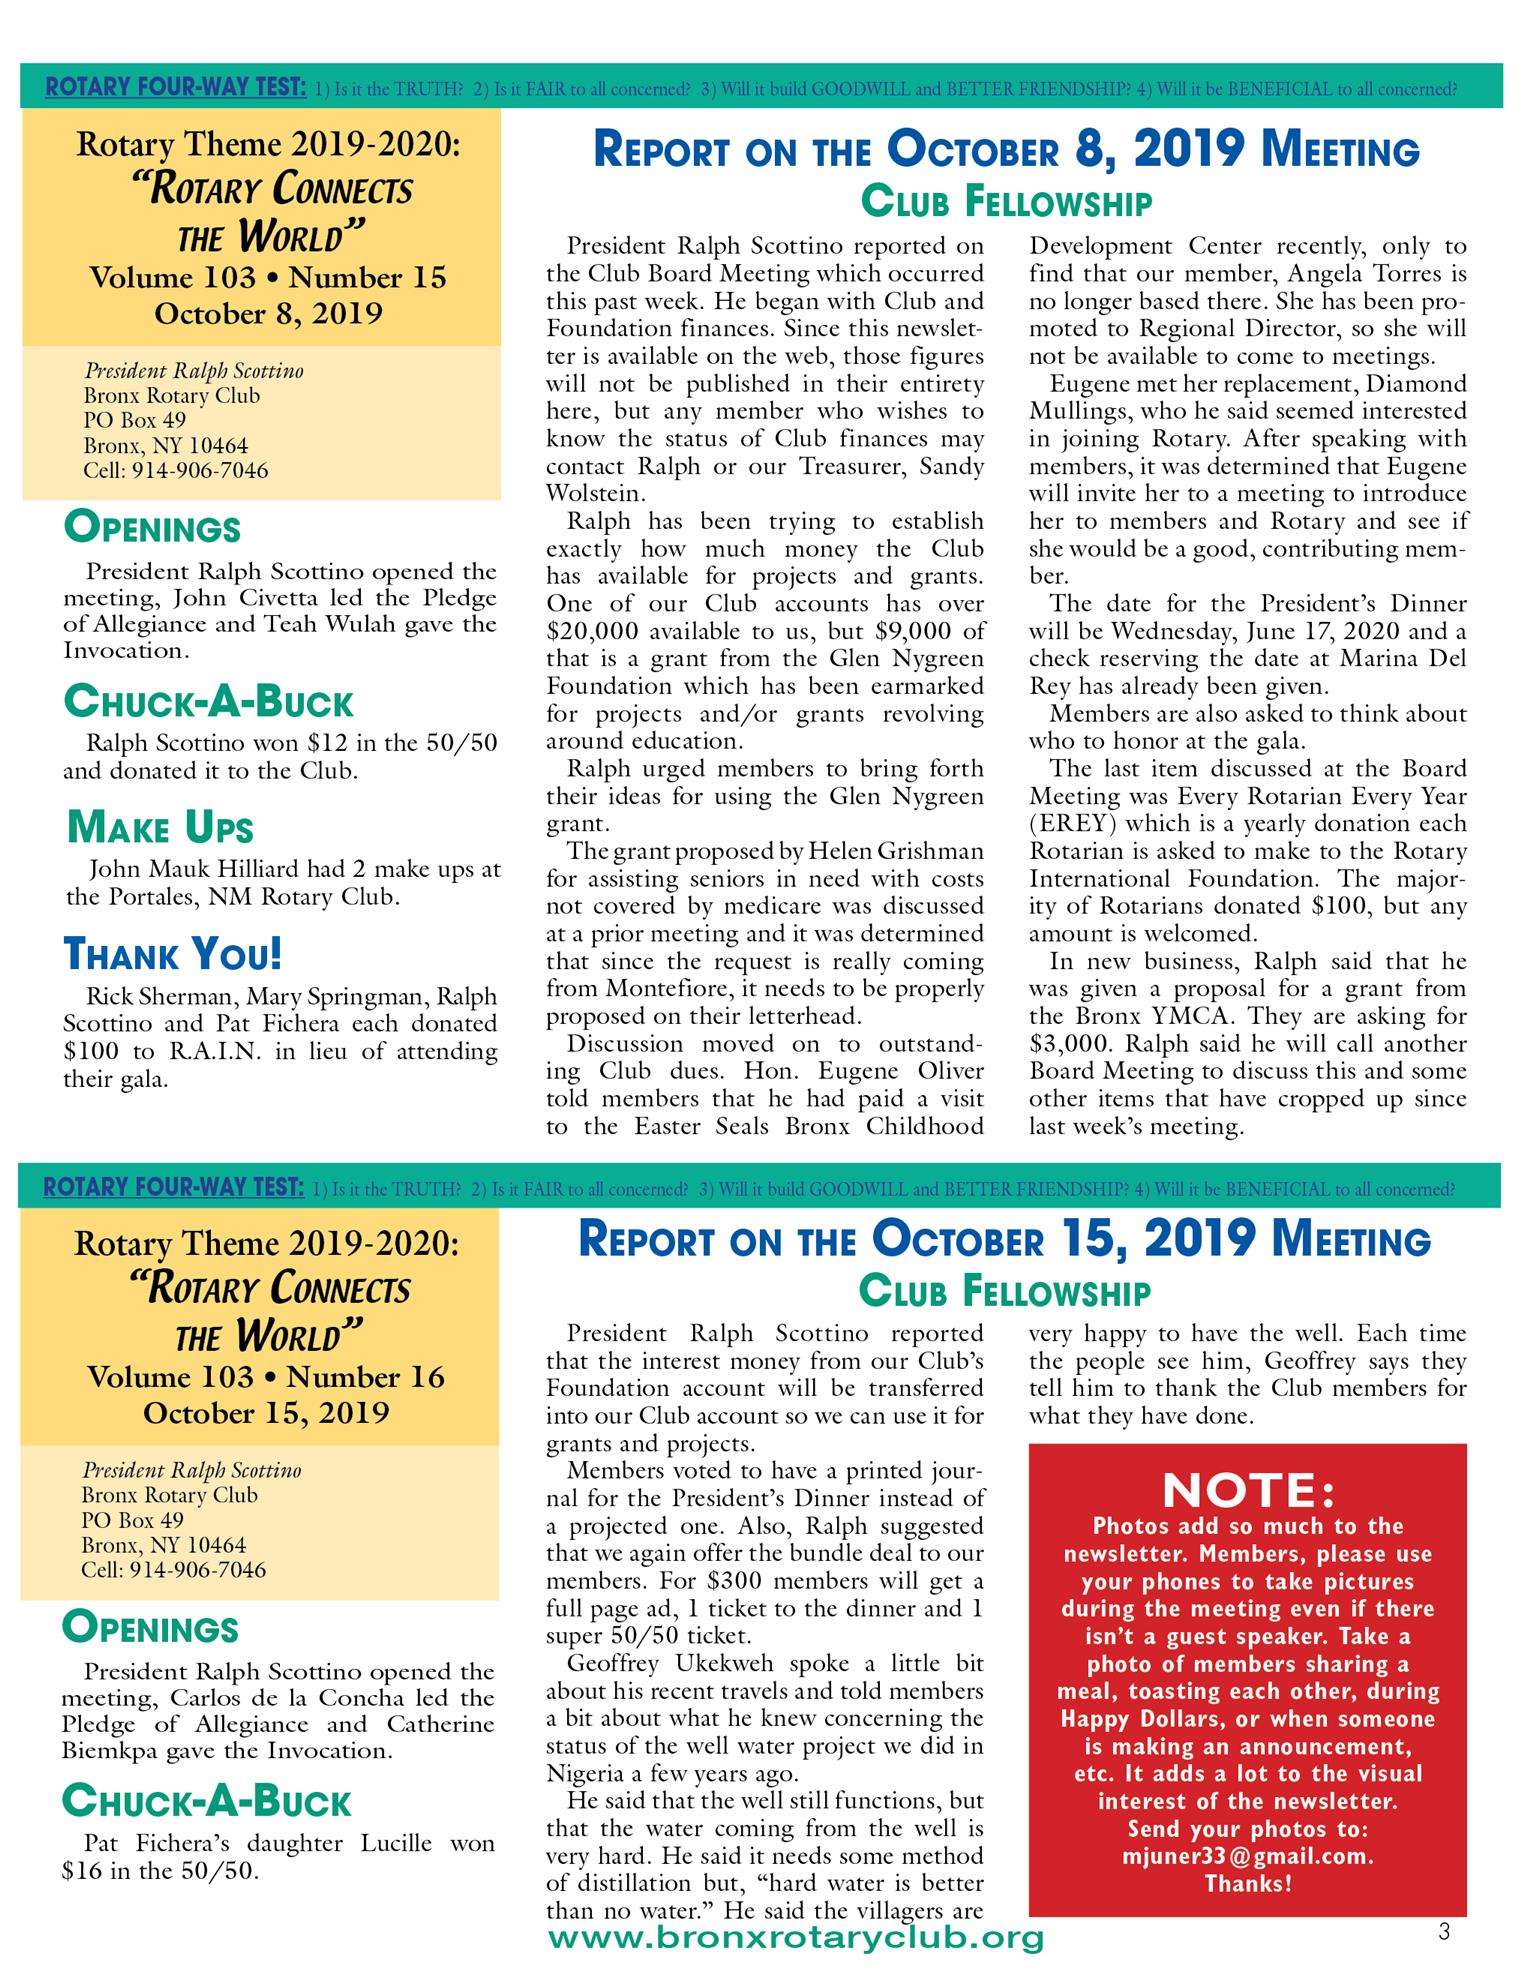 Tuesdays newsletter 10/1, 10/8 & 10/15, 2019 p3